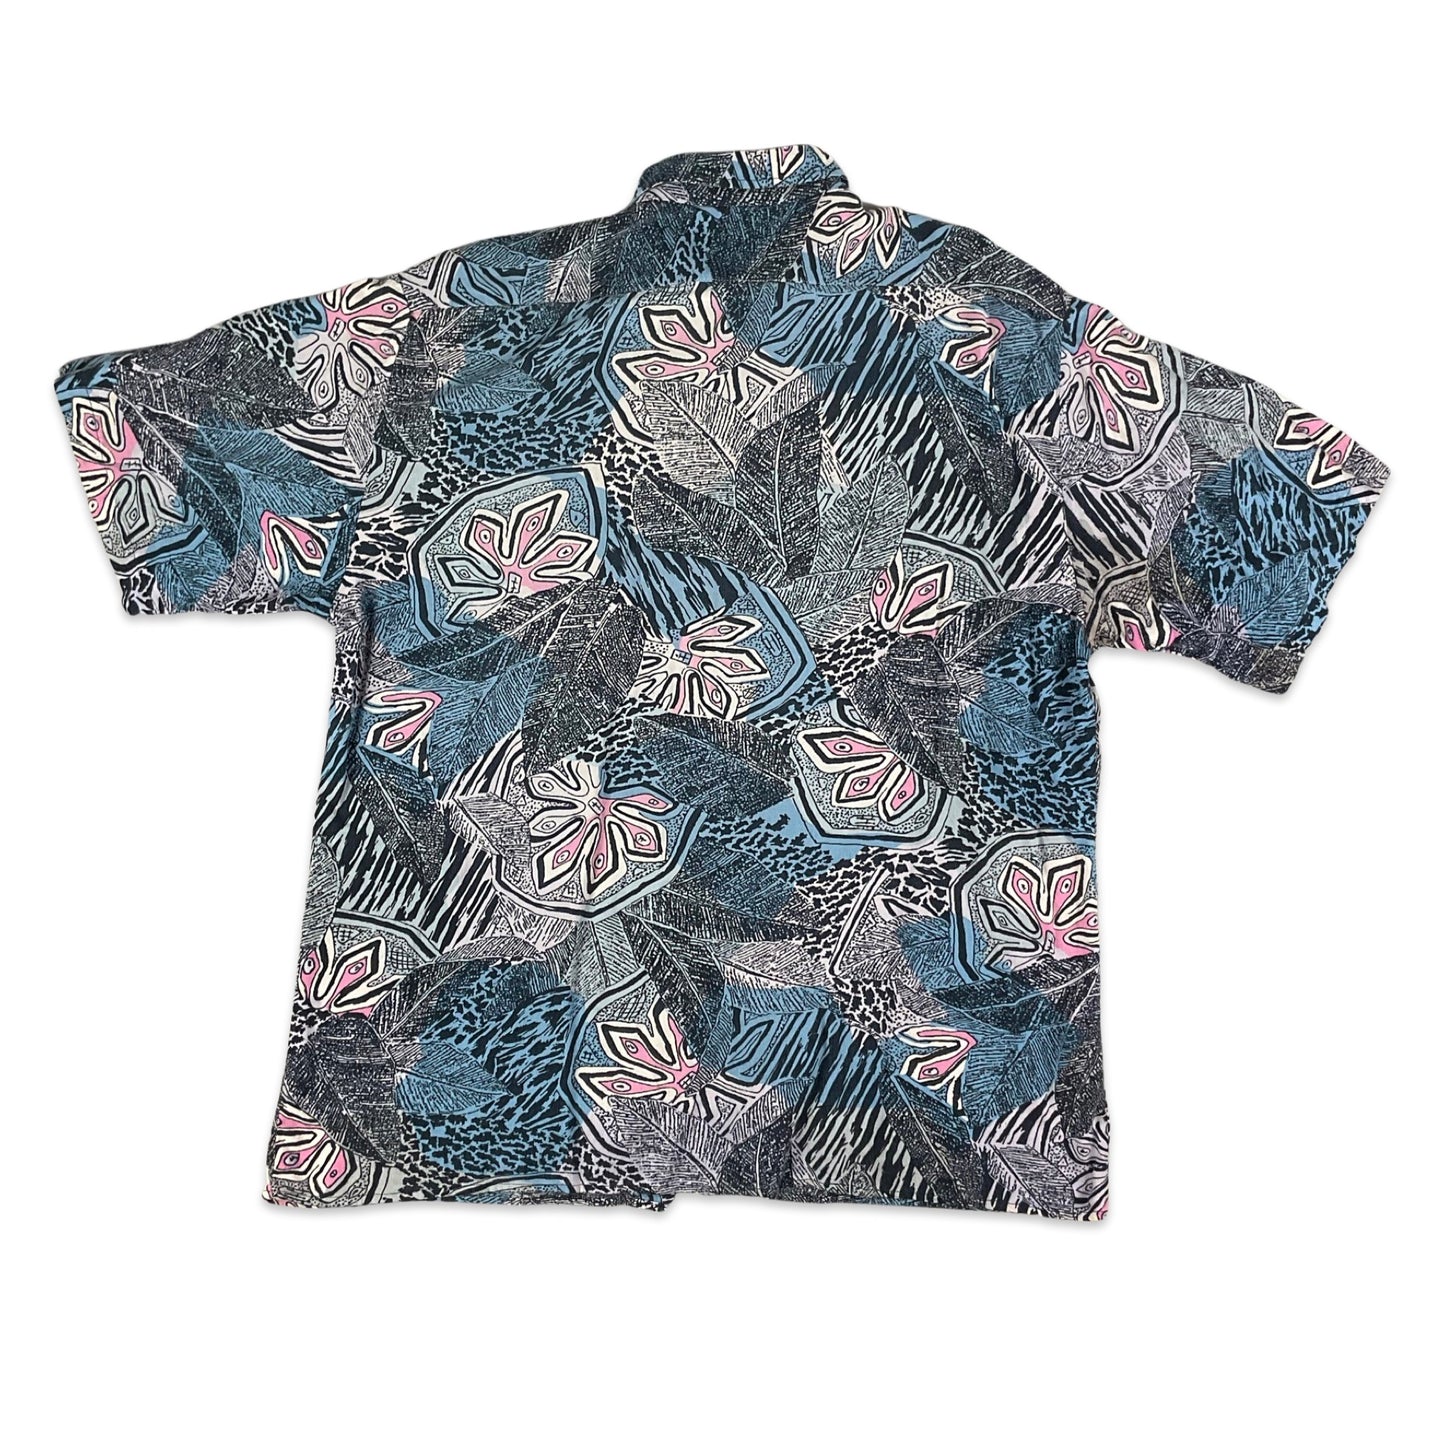 Vintage Black Blue & Pink Jungle Print Short Sleeve Shirt M L